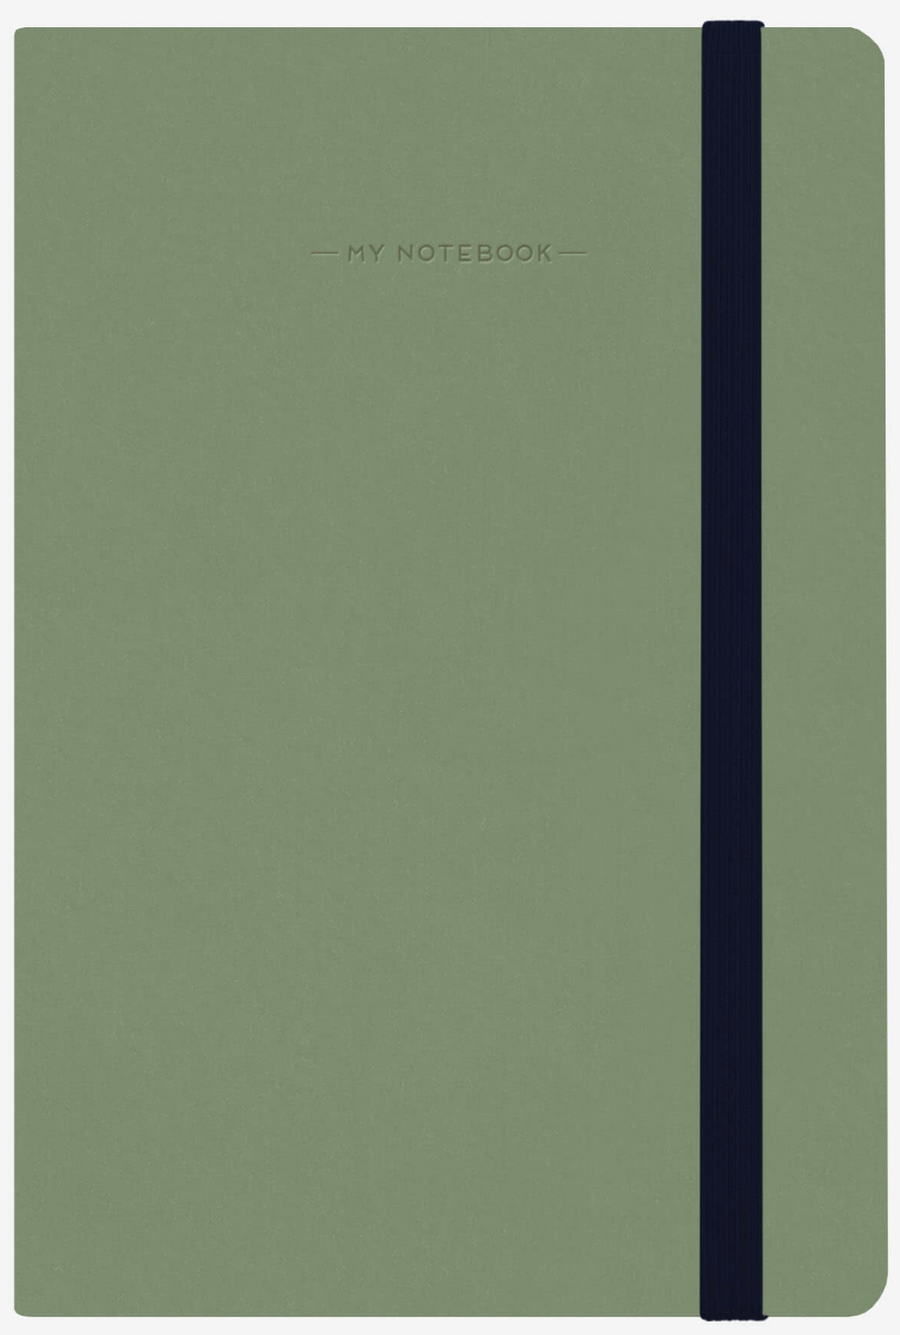 My Notebook - Medium Lined - Vintage Green